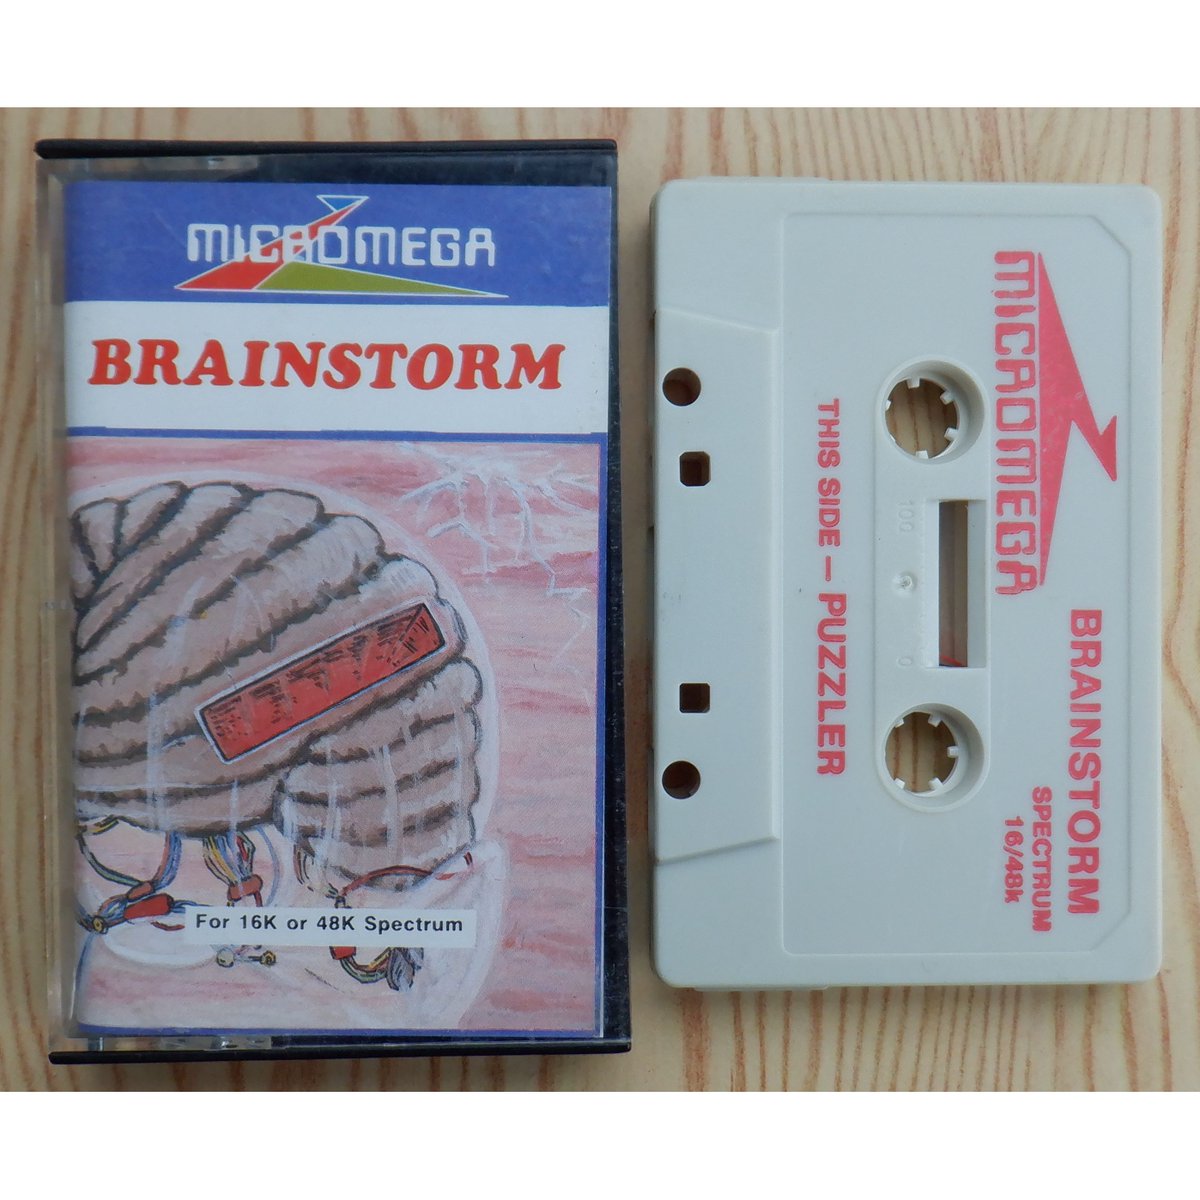 Brainstorm - a vintage computer game for the ZX Spectrum on cassette ©1983 Mikro-Gen. 🧠 🛒 ebay.co.uk/itm/1666250548… #Vintage #FollowVintage #Brainstorm #VintageComputerGame #1980s #ZXSpectrum #MikroGen #eBay